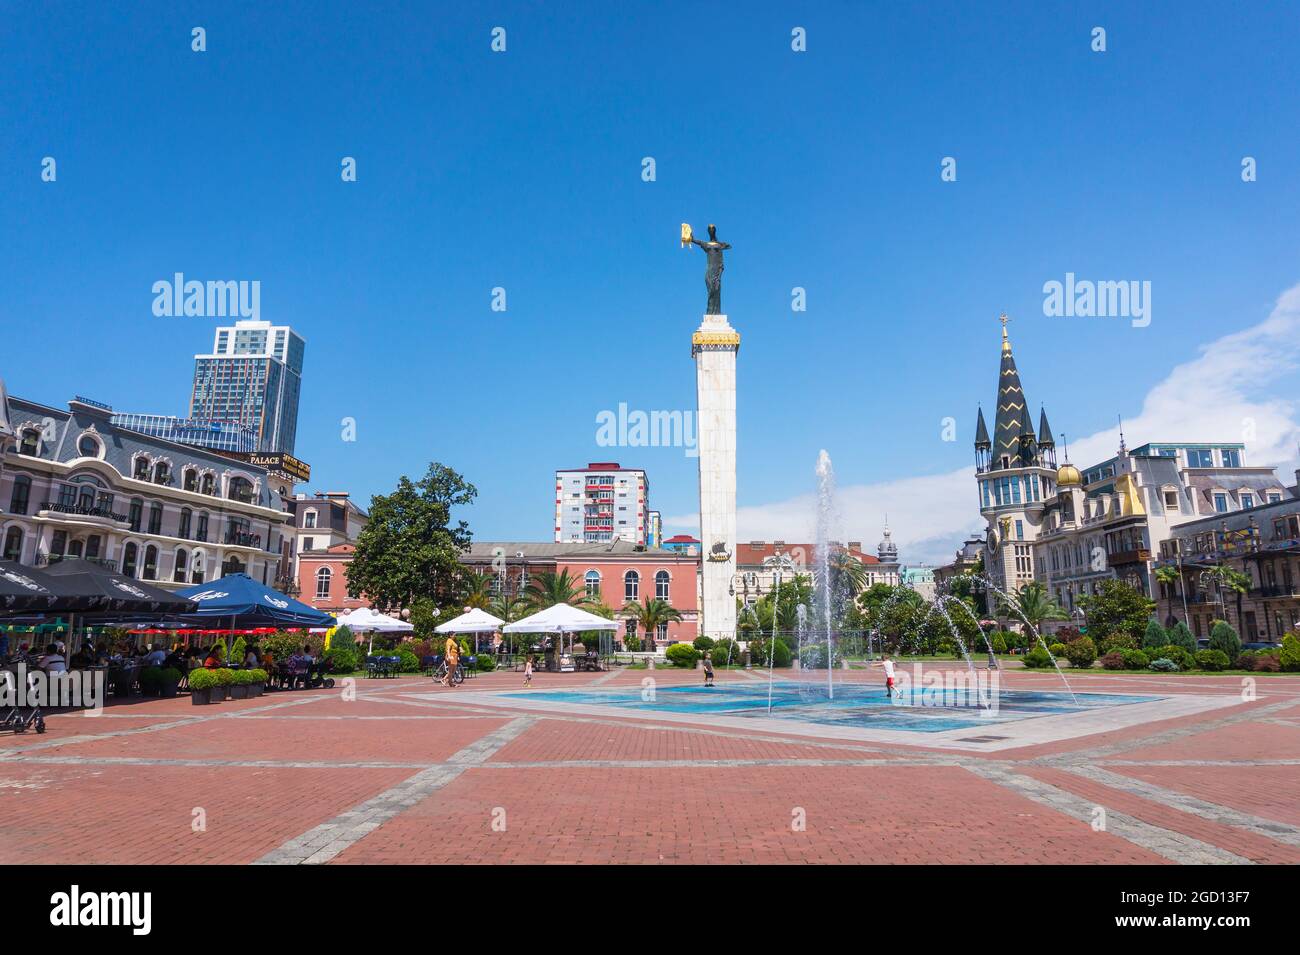 Batumi, Georgia - July 2, 2021: The European square with The Medea Monument, fountain and restaurants in city center of Batumi, Georgia in Summer Stock Photo